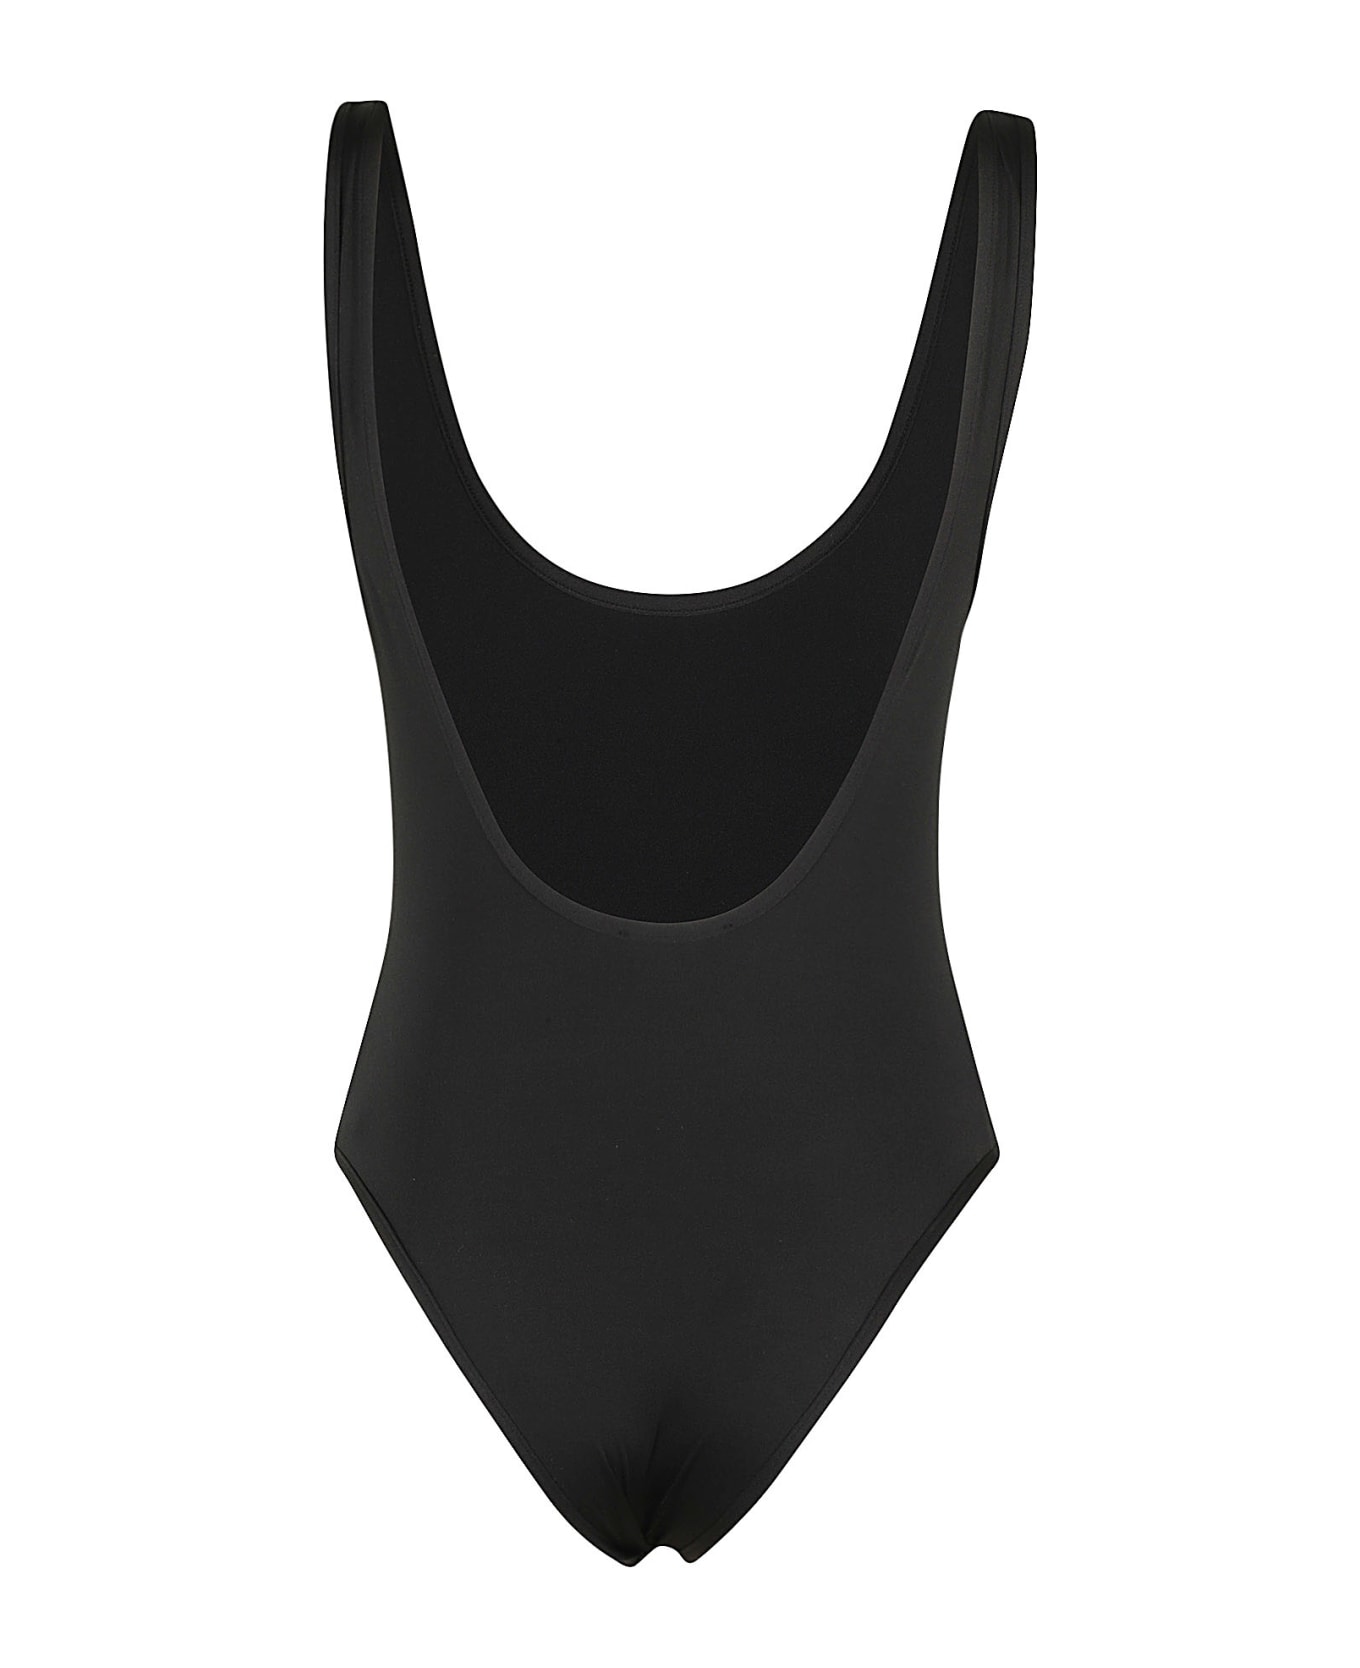 Balmain Swimsuit - Black ワンピース